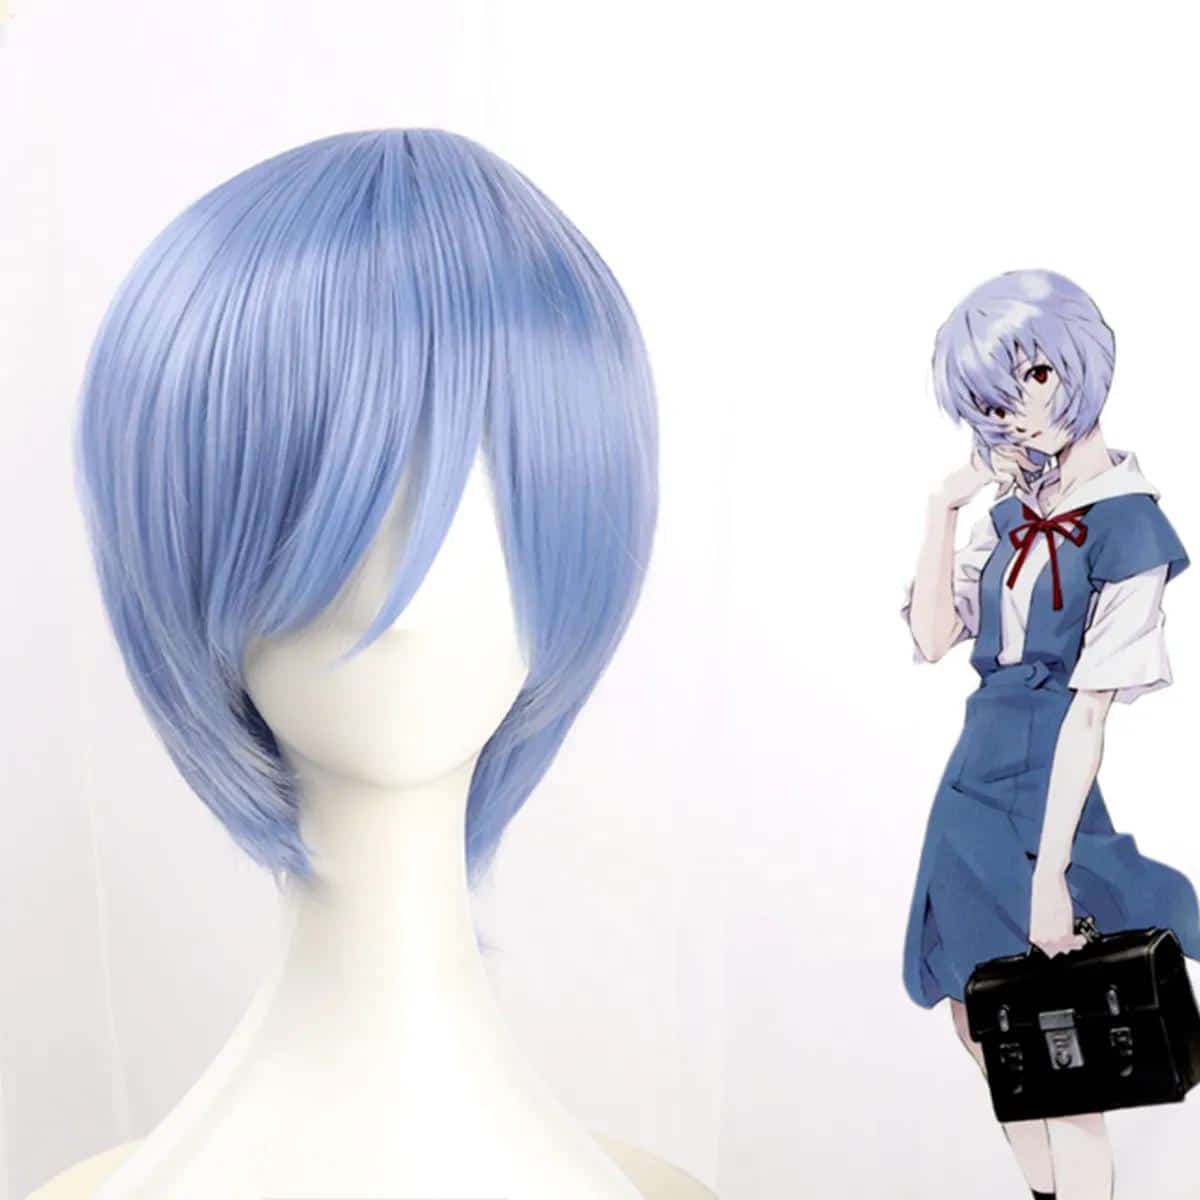 EVA Evangelion Lingpoli blue short hair cosplay wig 1